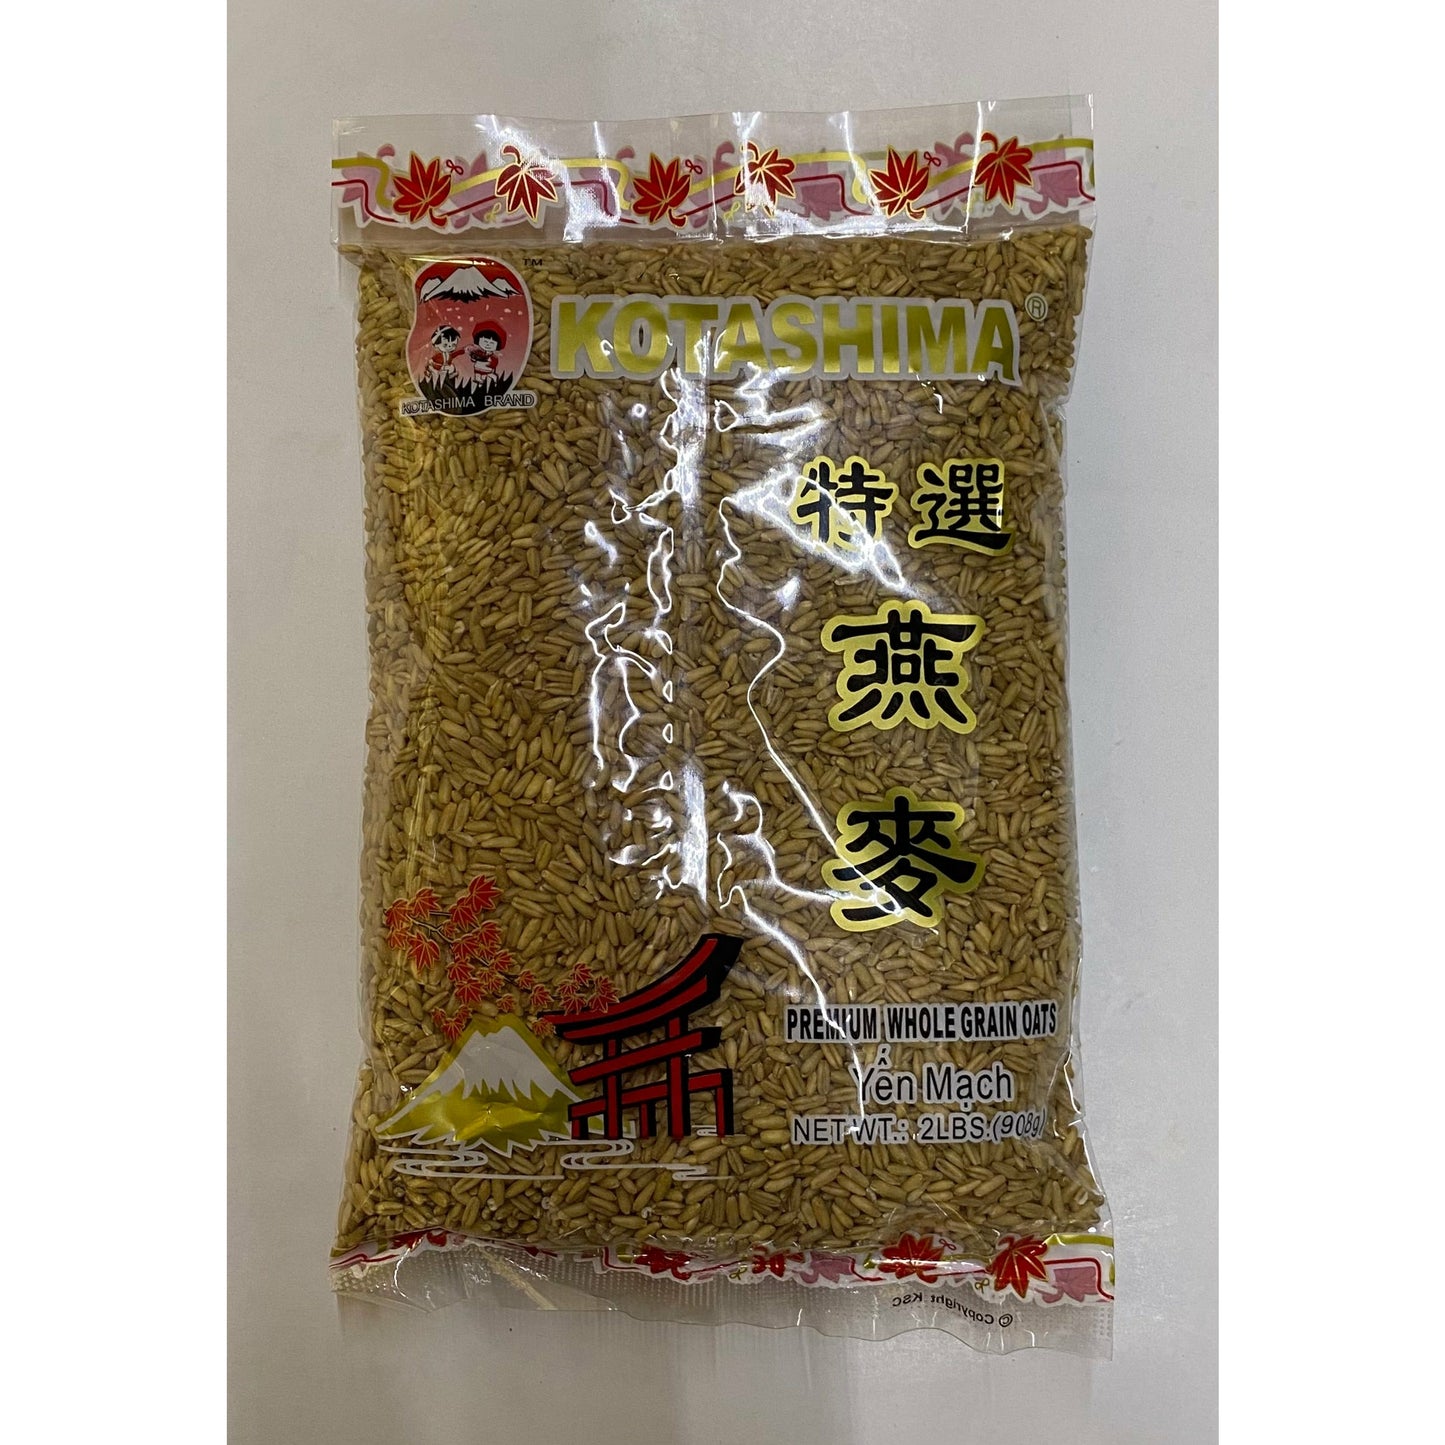 Rice-KOTASHIMA Oatmeal